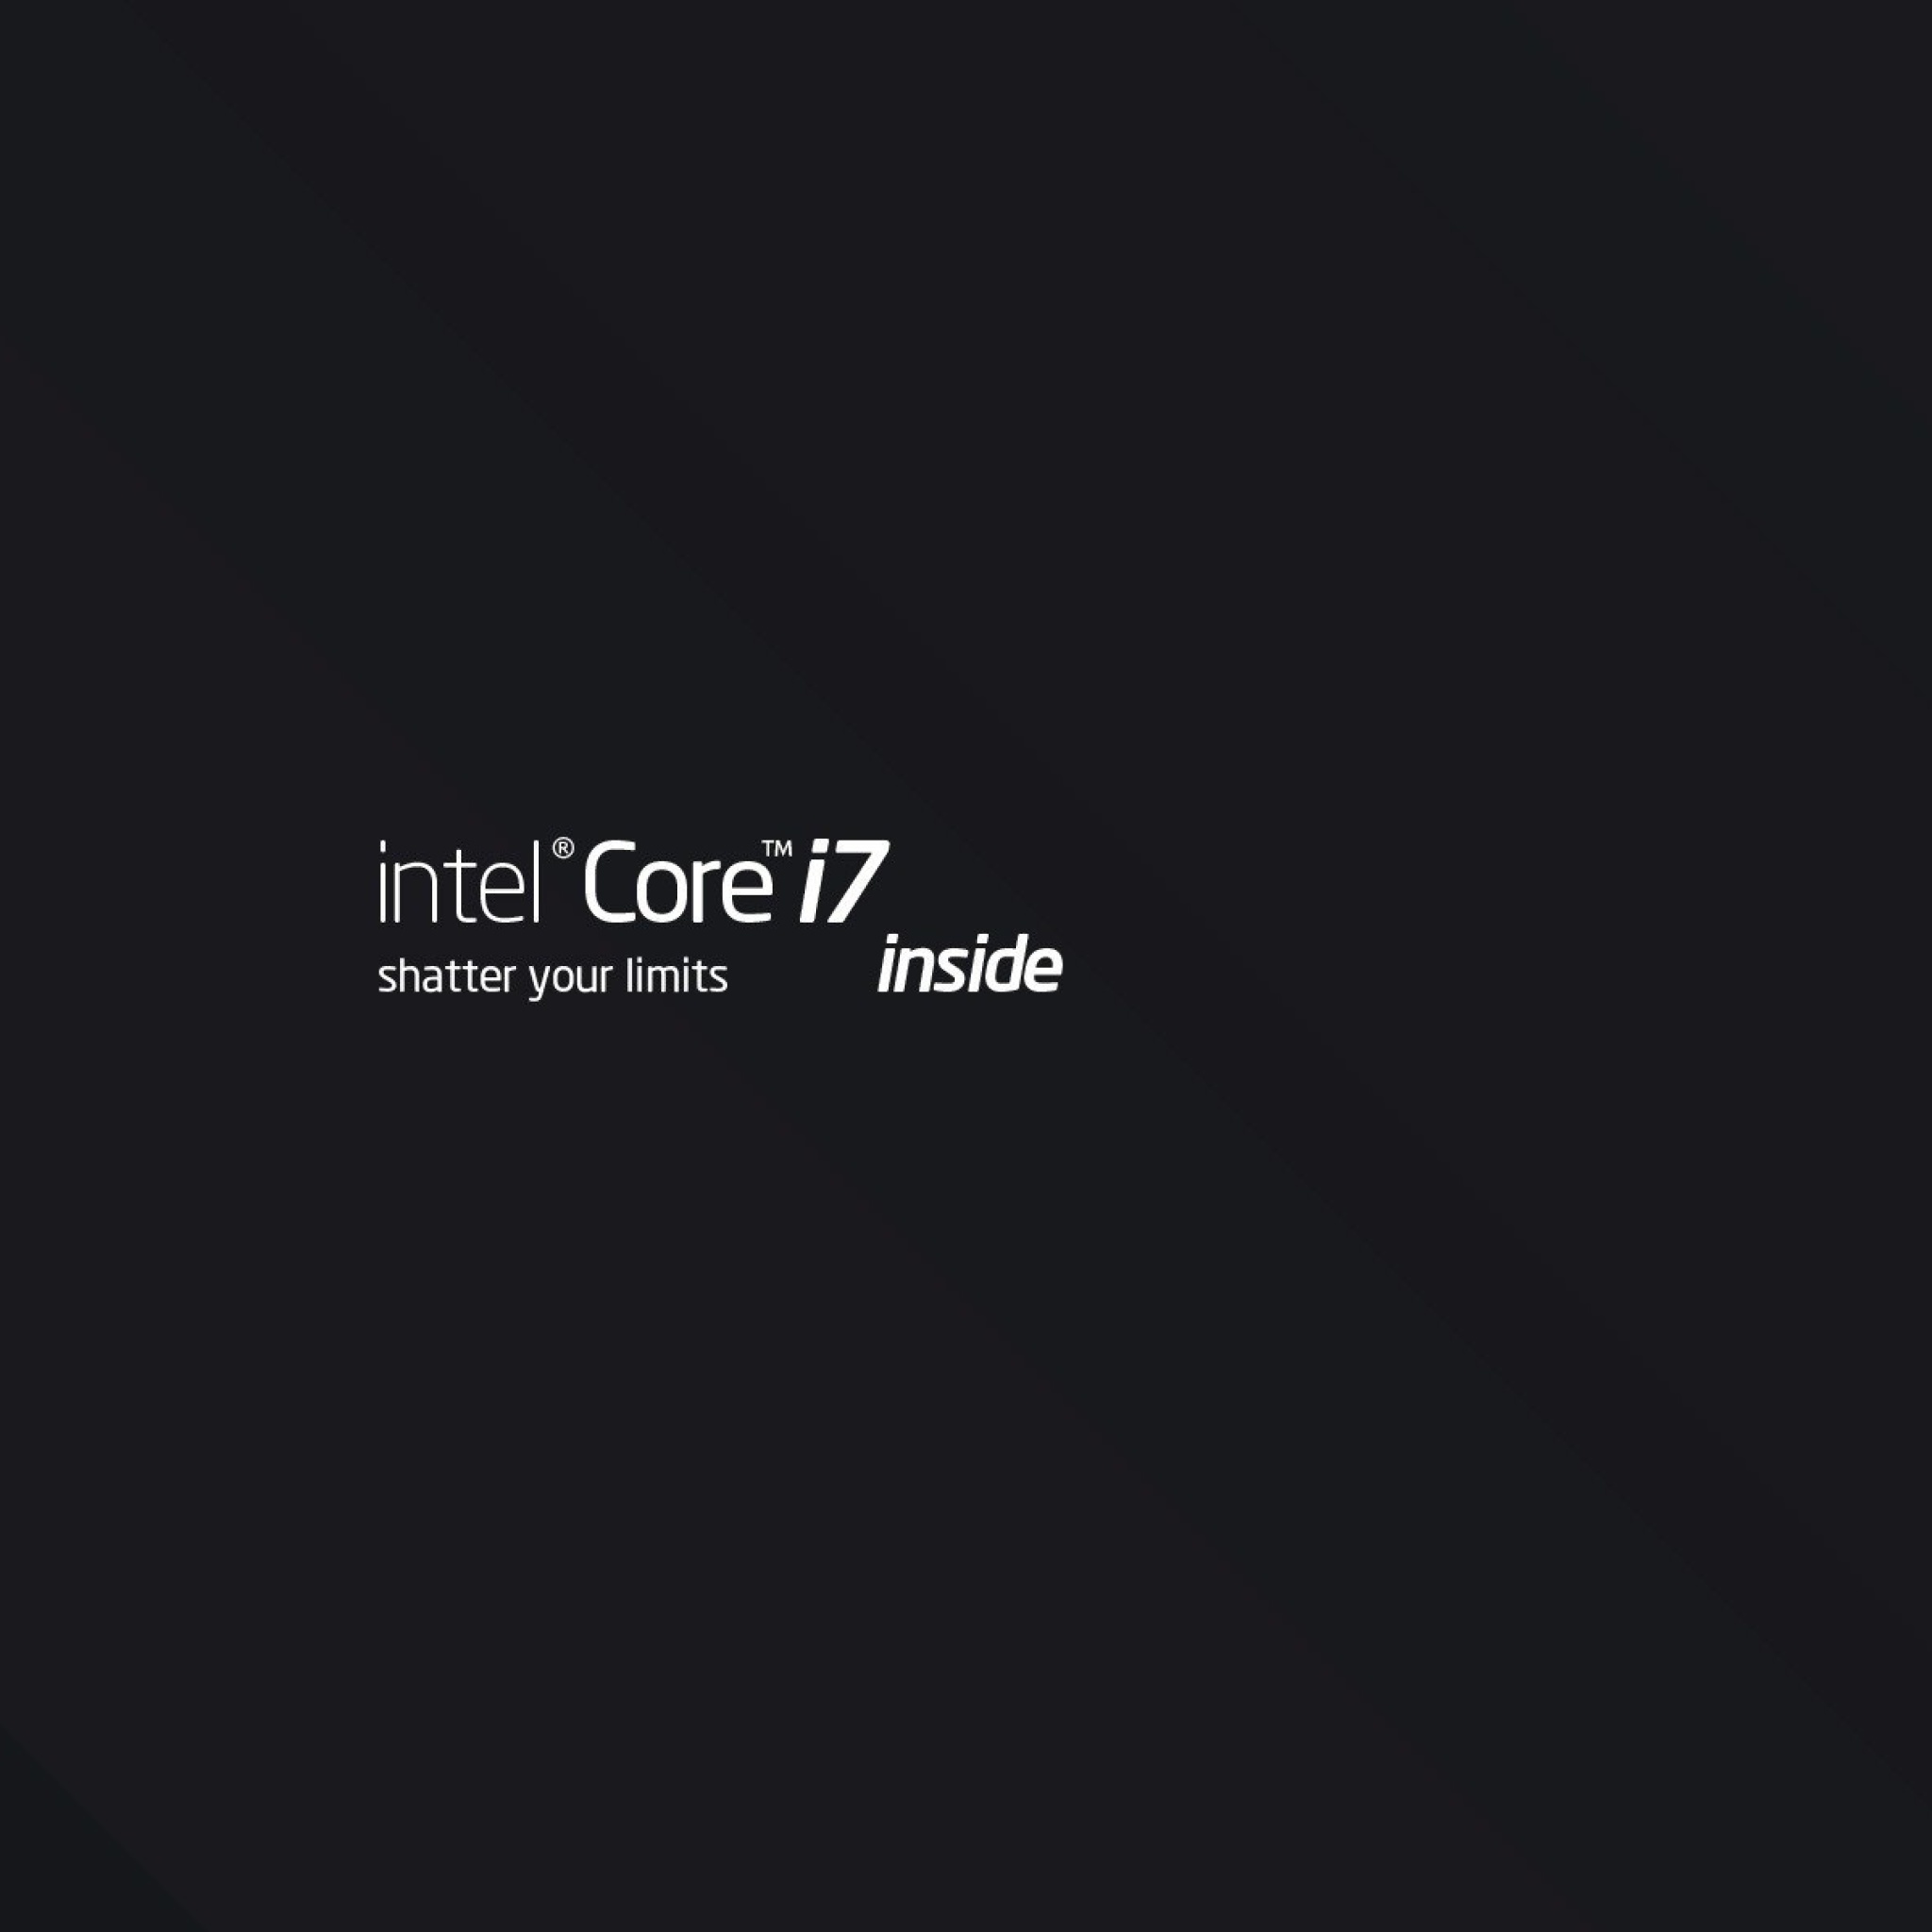 Hardcore 1.12 2. Обои Интел. Заставка на рабочий стол Intel. Обои Core i7. Обои Intel Core i7 1920 1080.